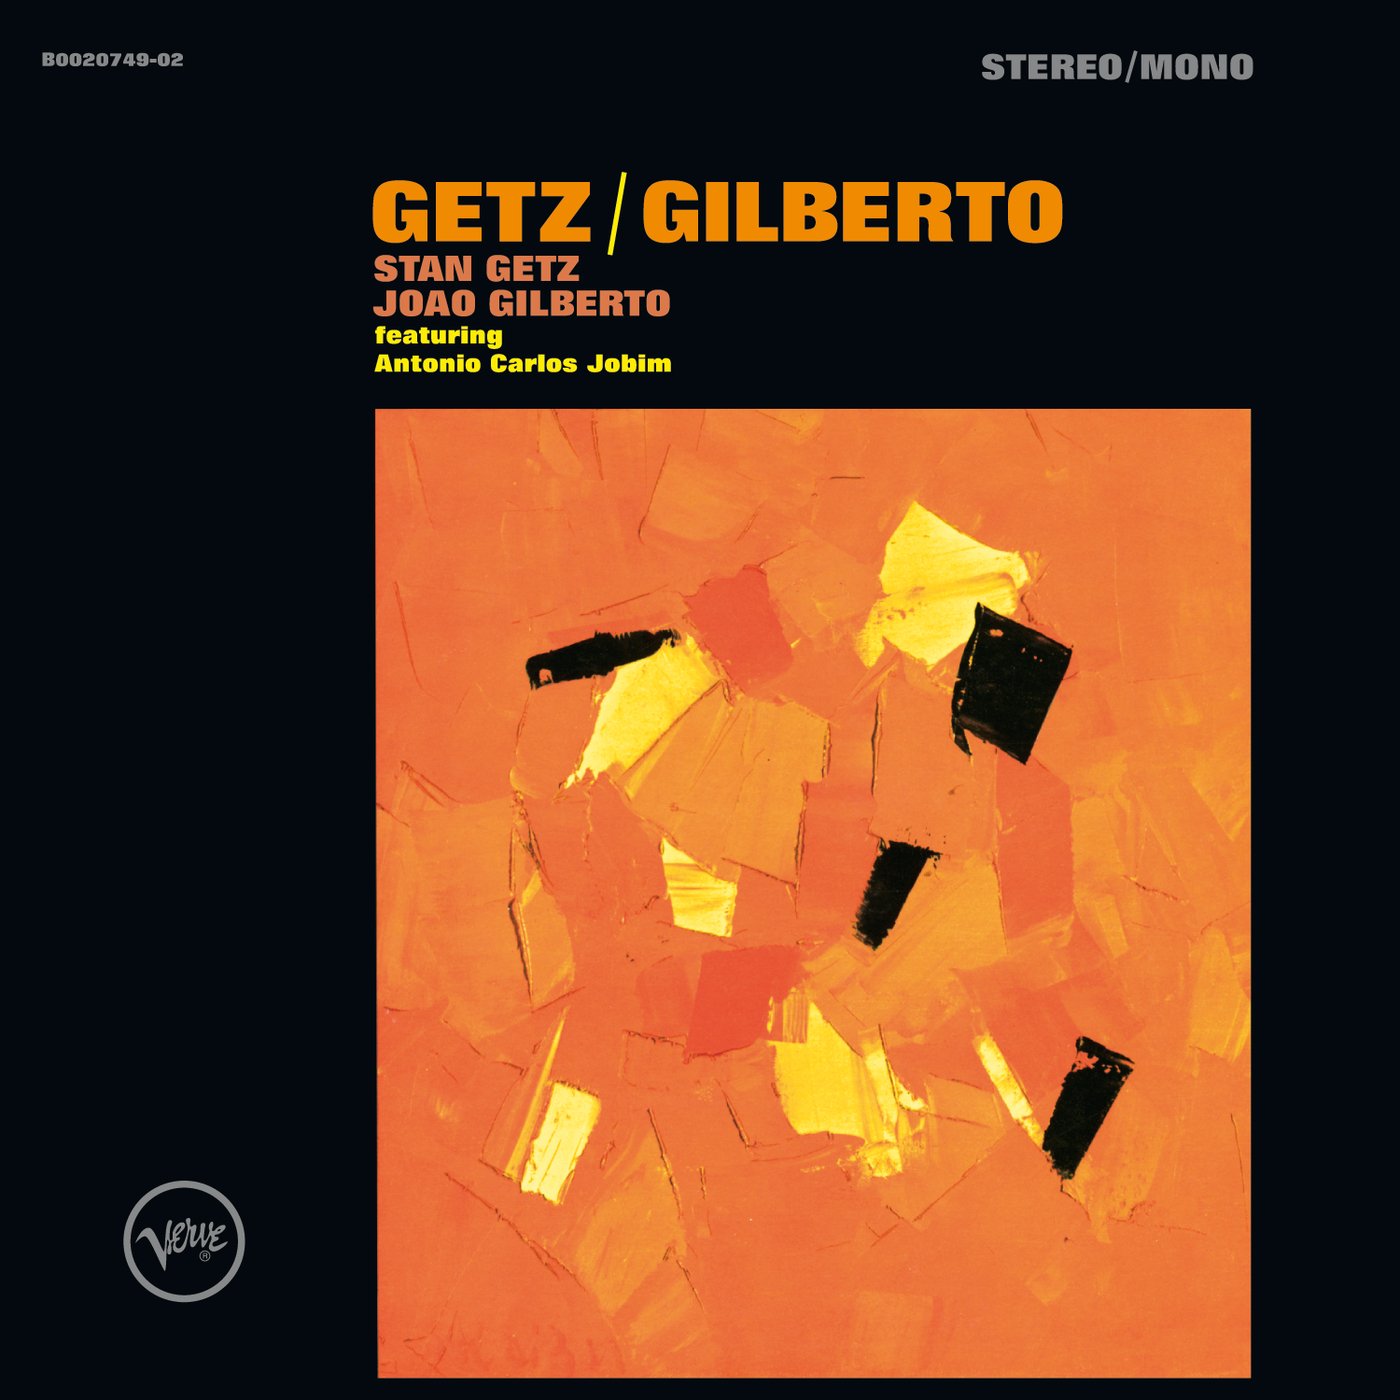 Getz/Gilberto "Getz/Gilberto" LP